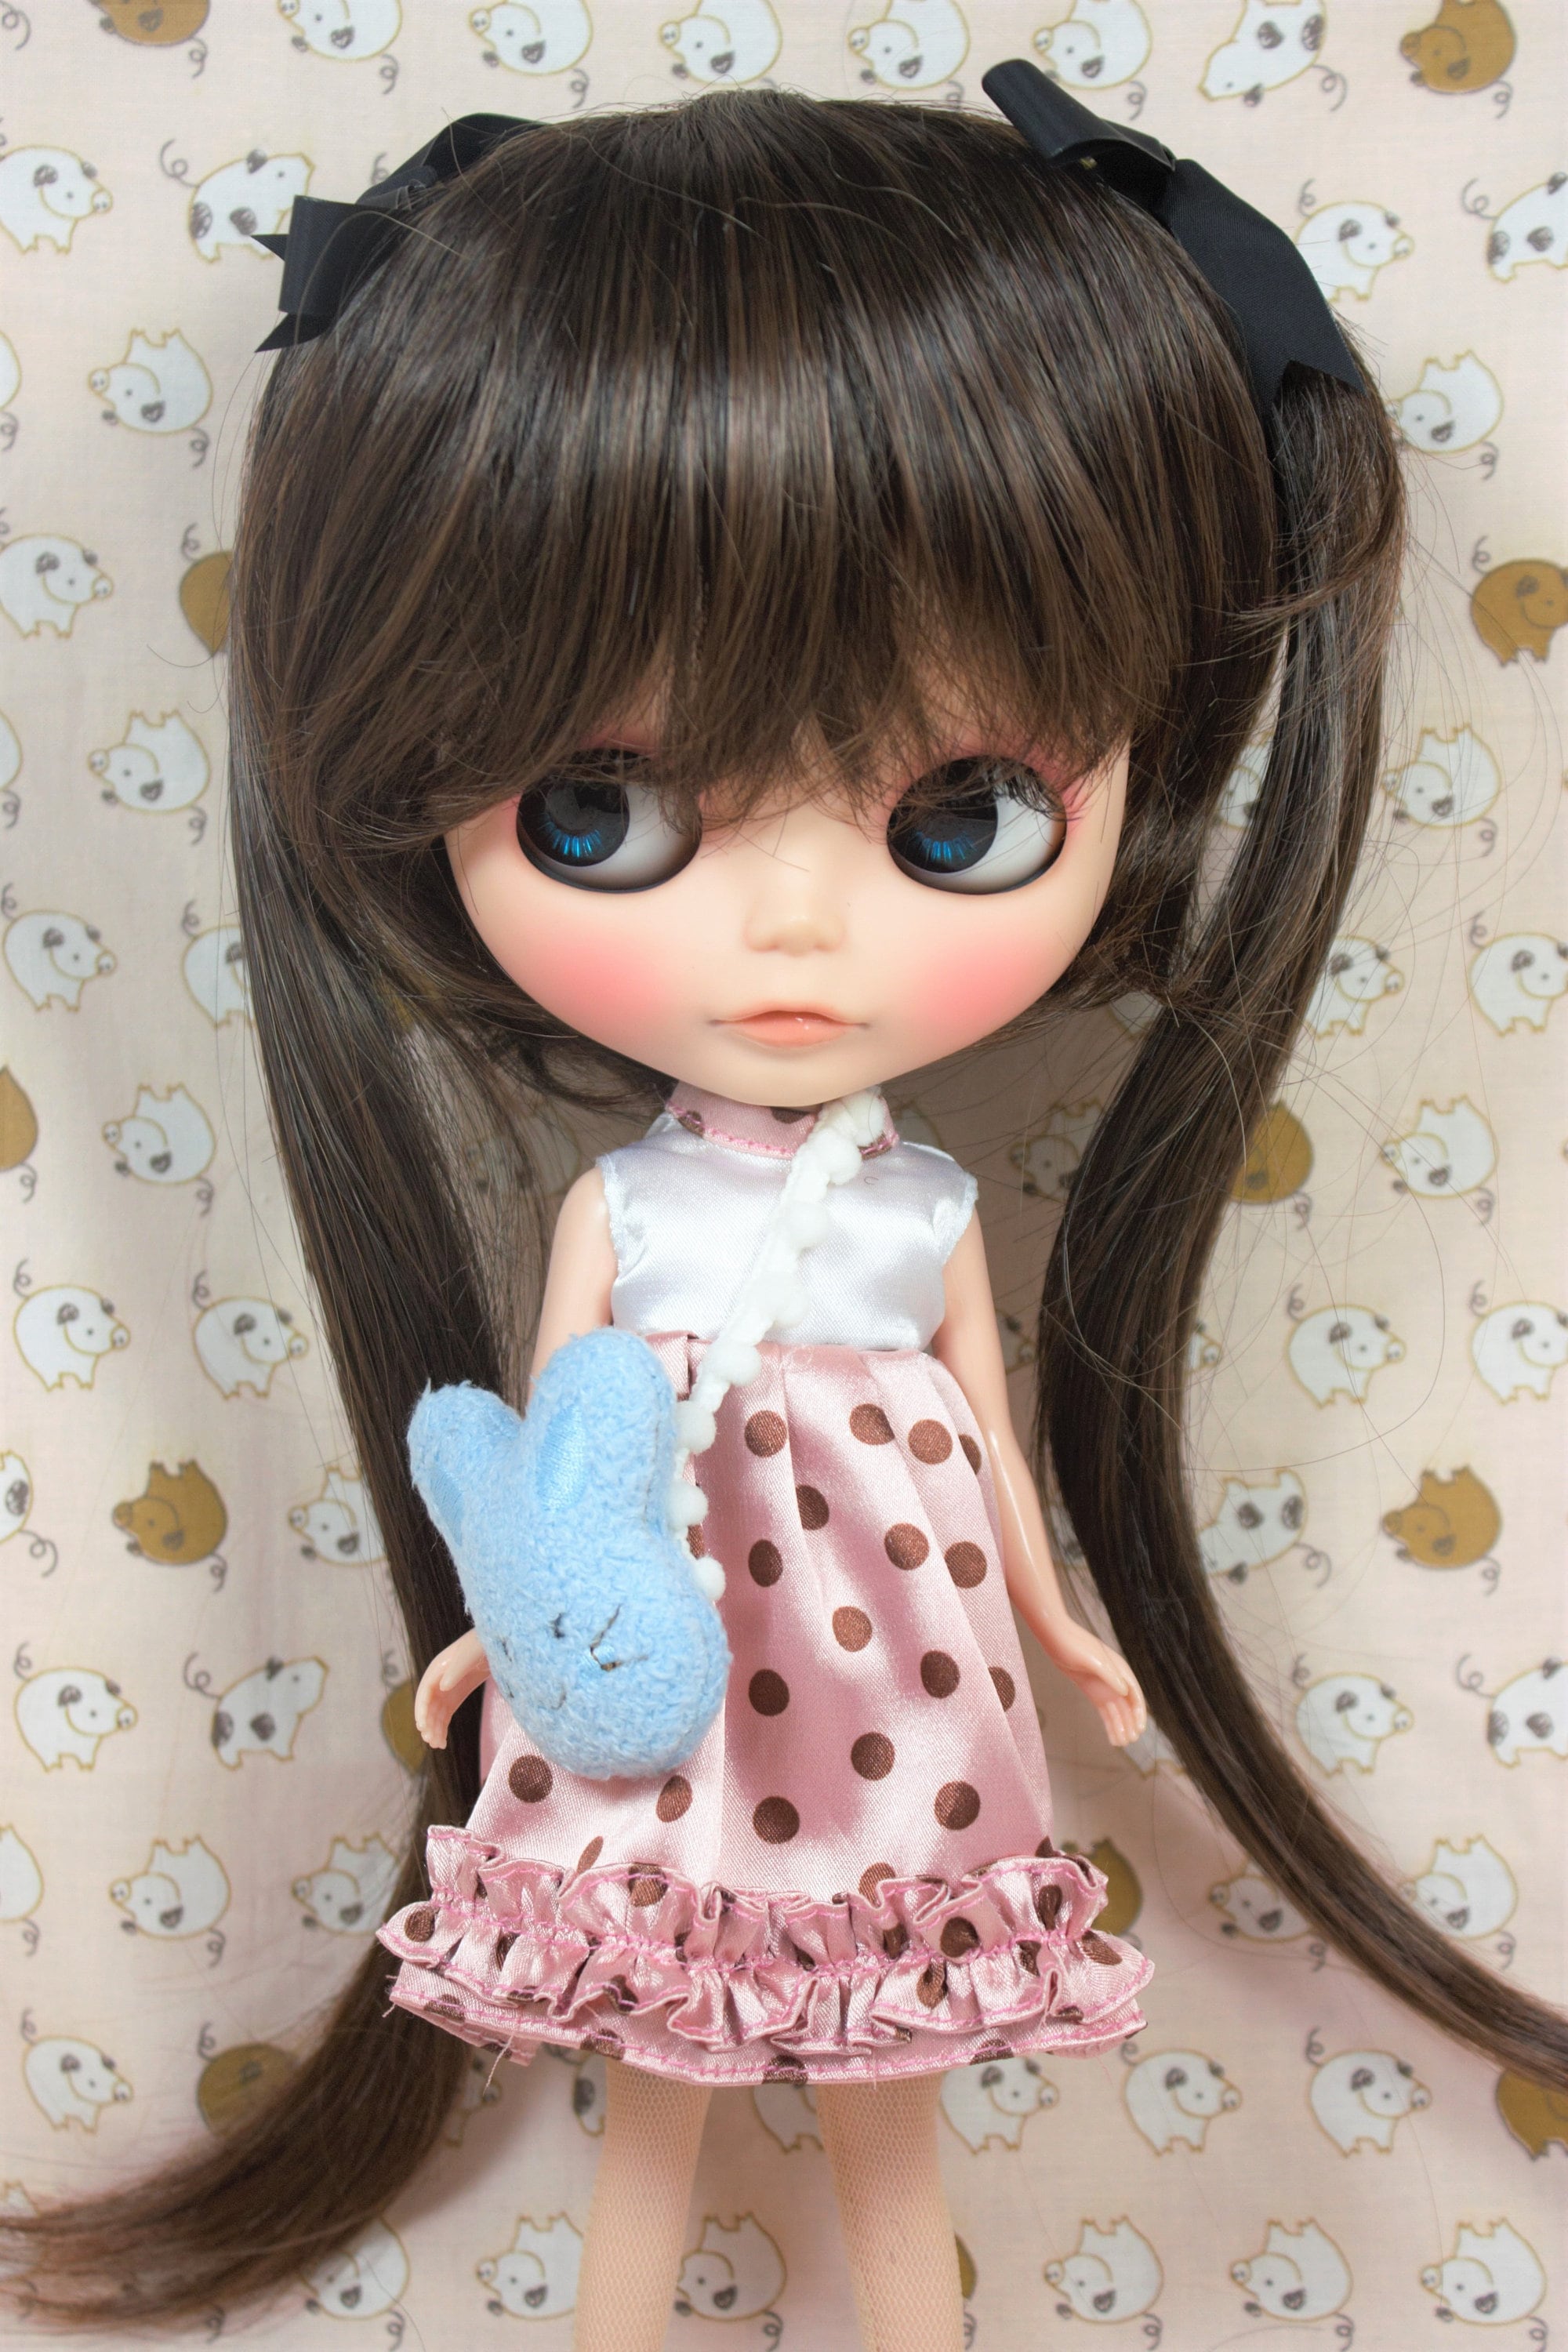 cutesy sweet doll brown pigtails w/ curtain bangs